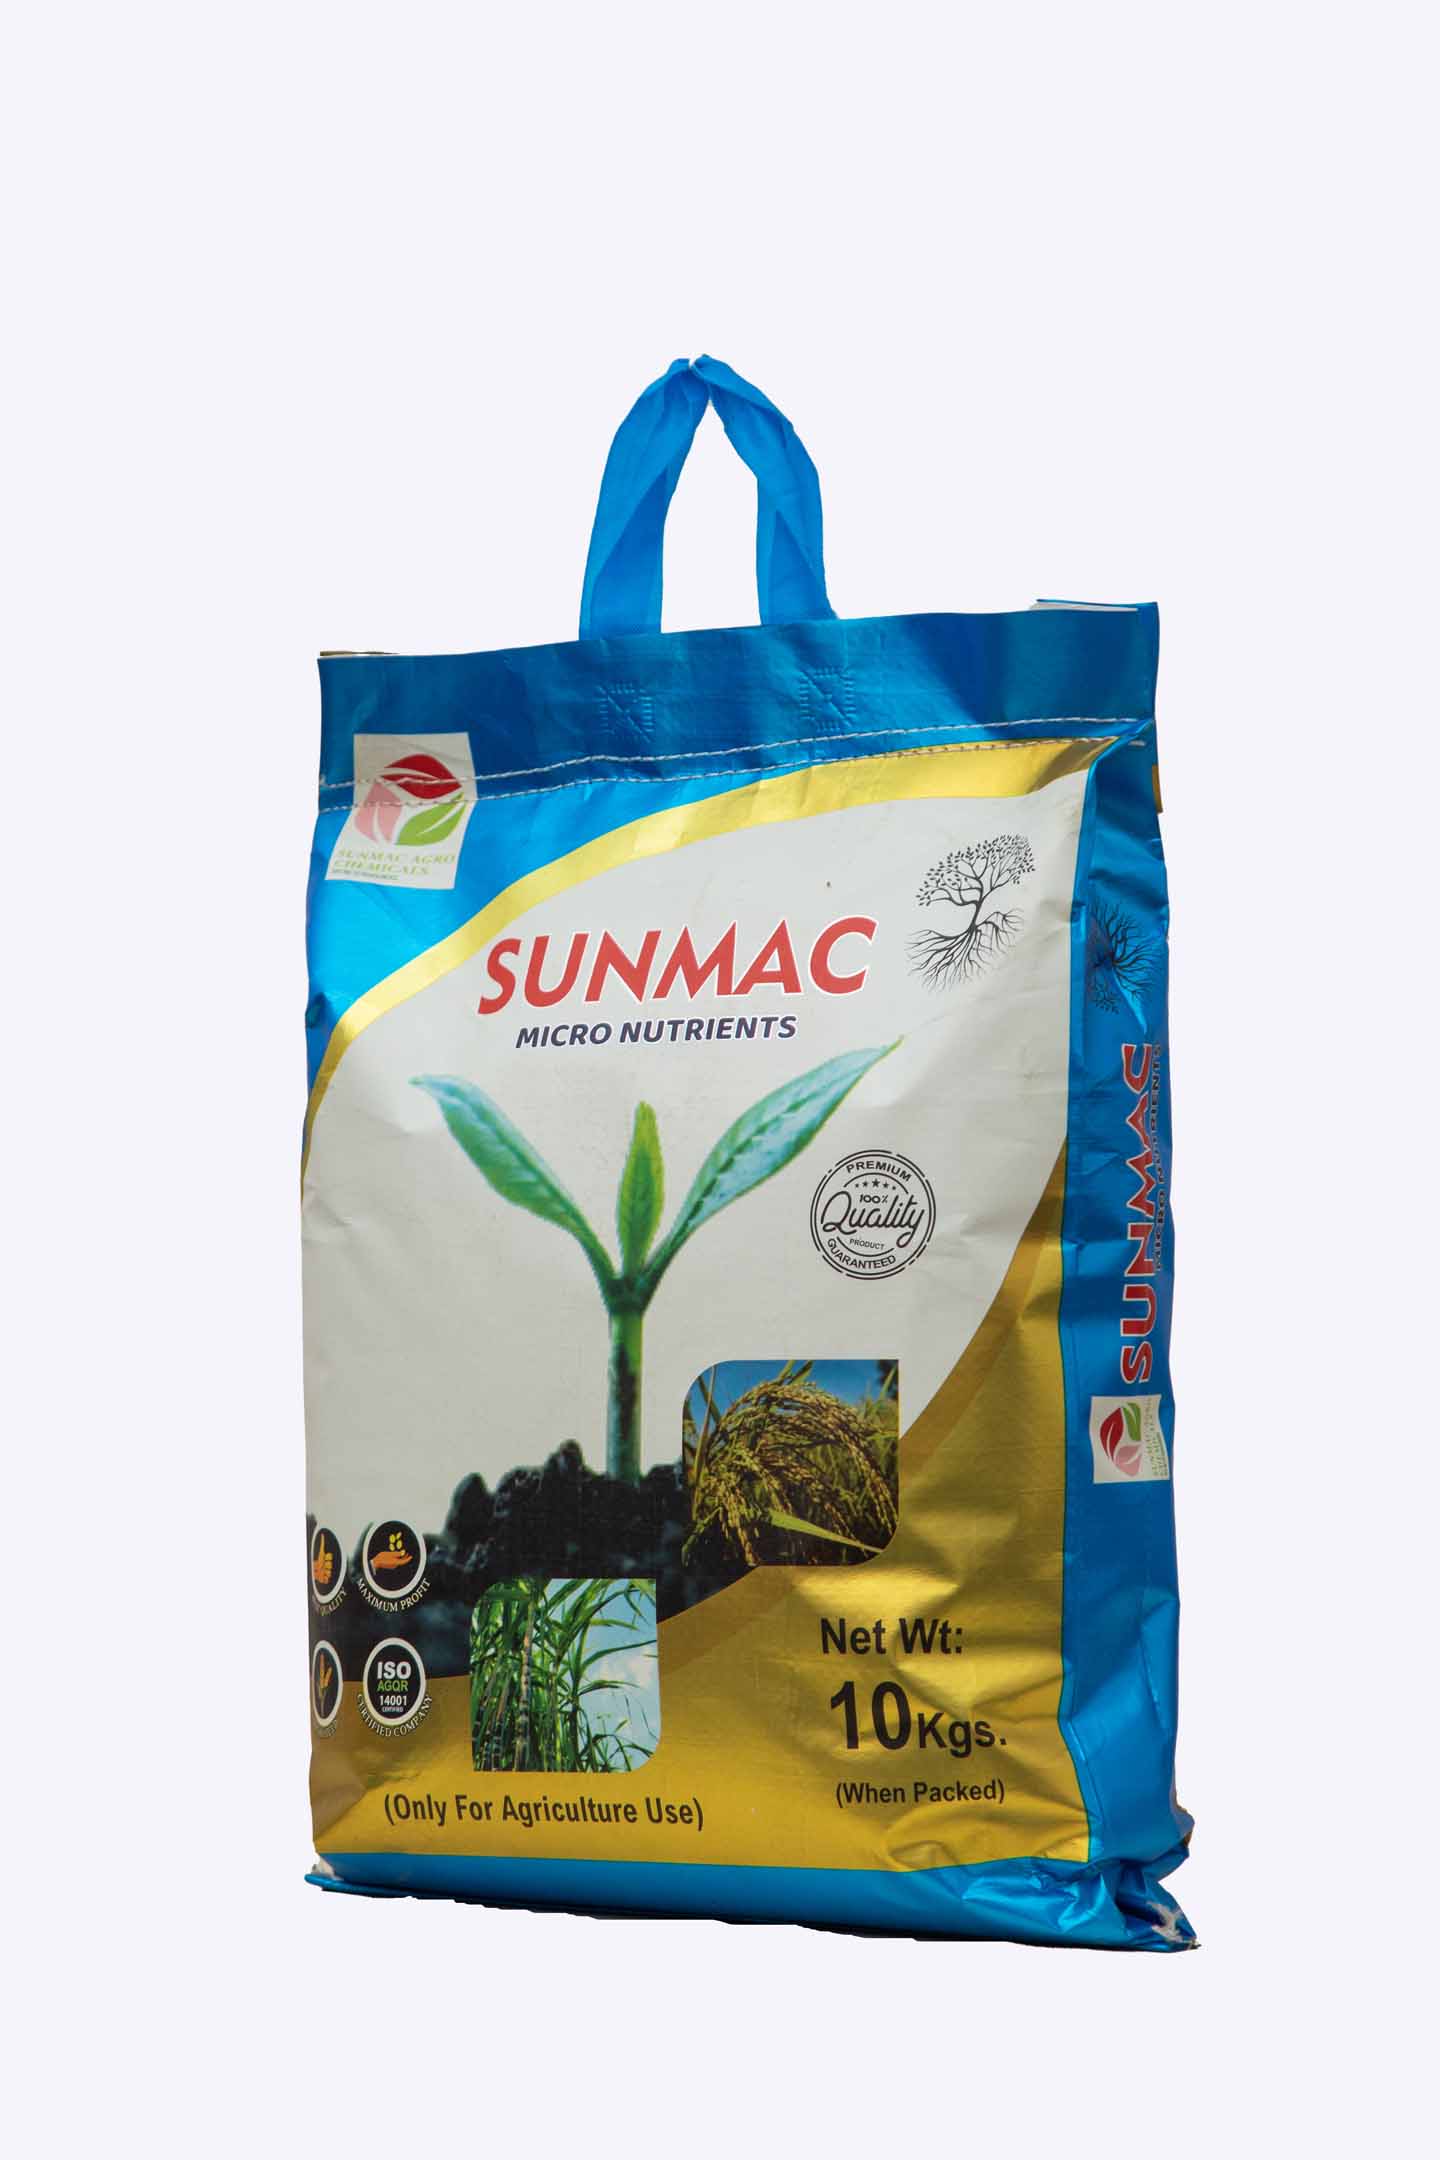 Sunmac Micro Nutrients